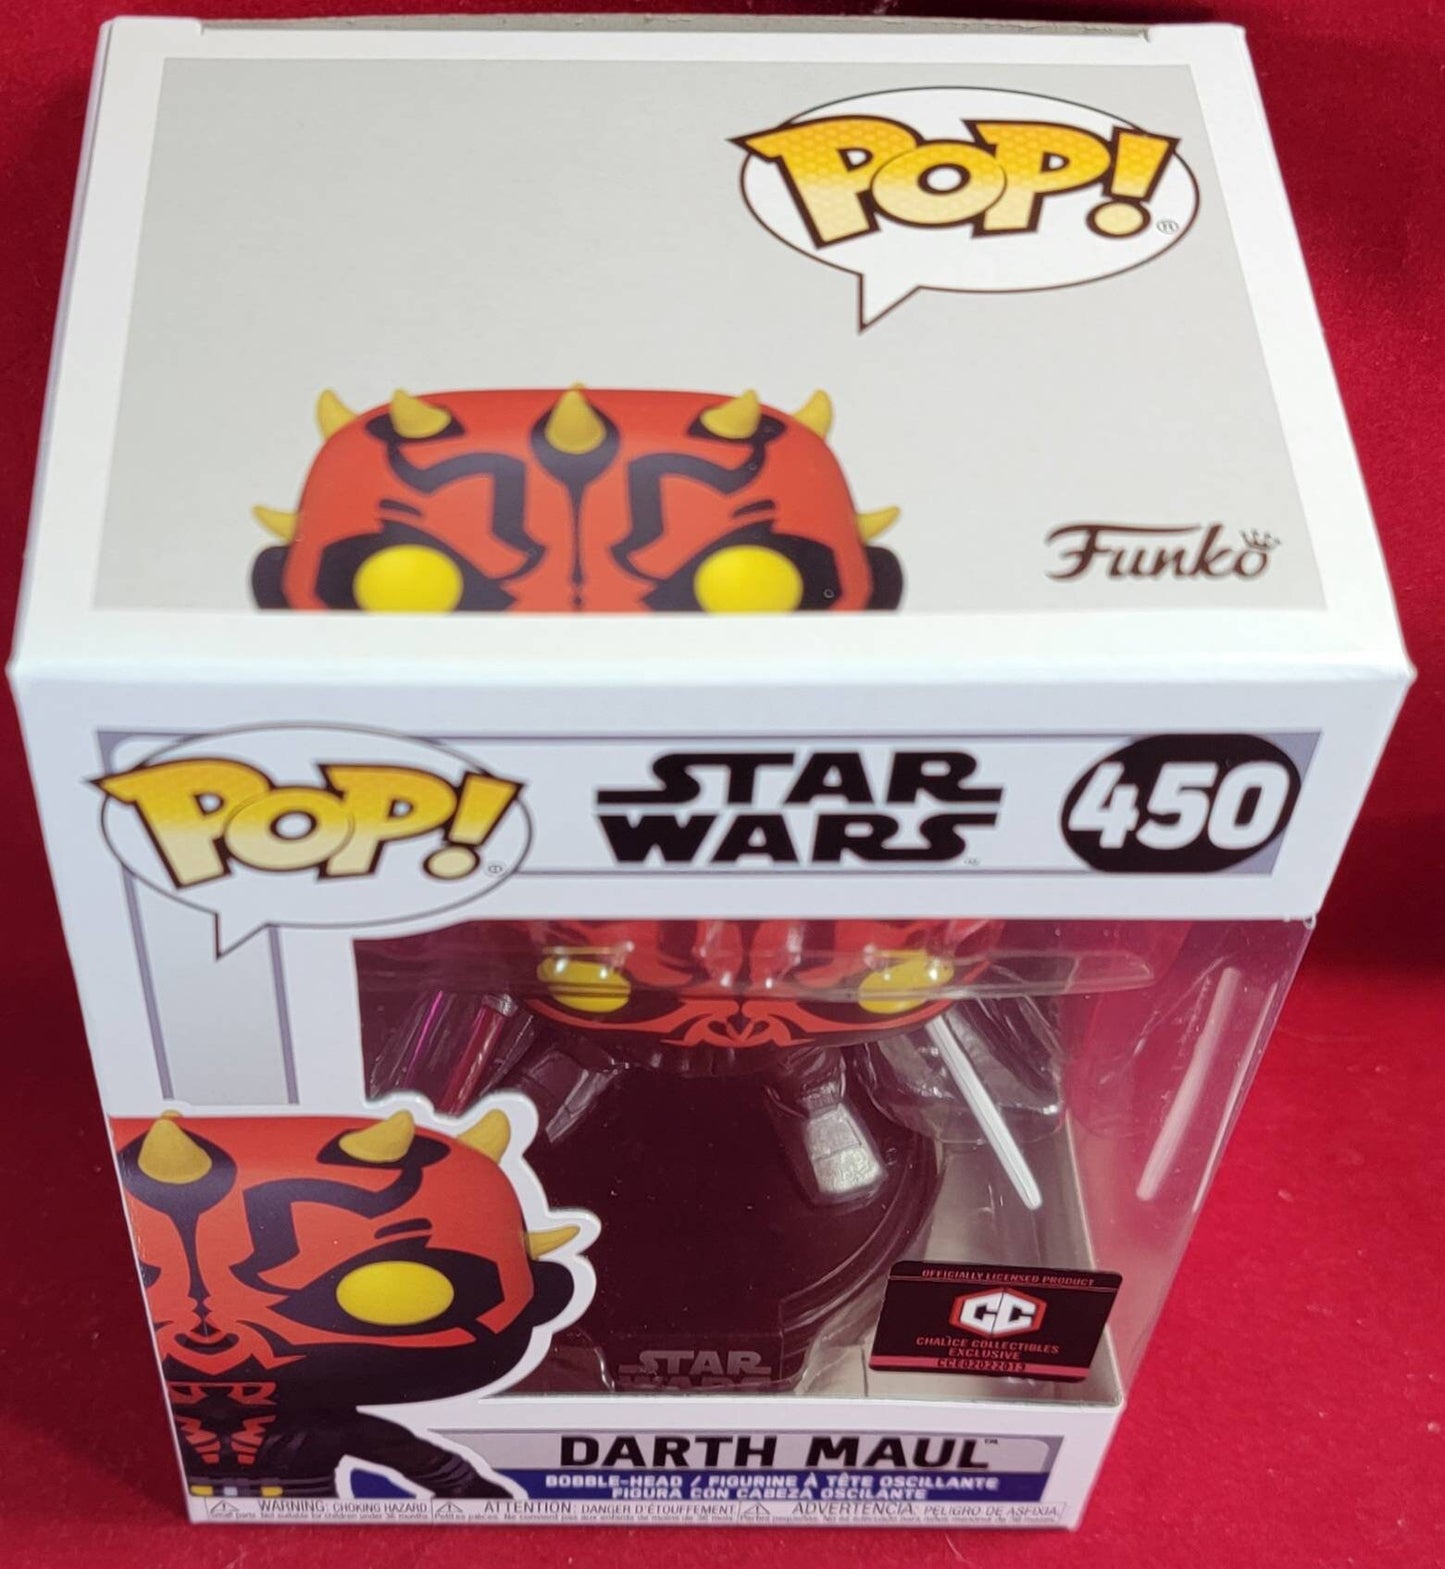 Star Wars Darth maul chalice collectibles exclusive Funko # 450 (nib)